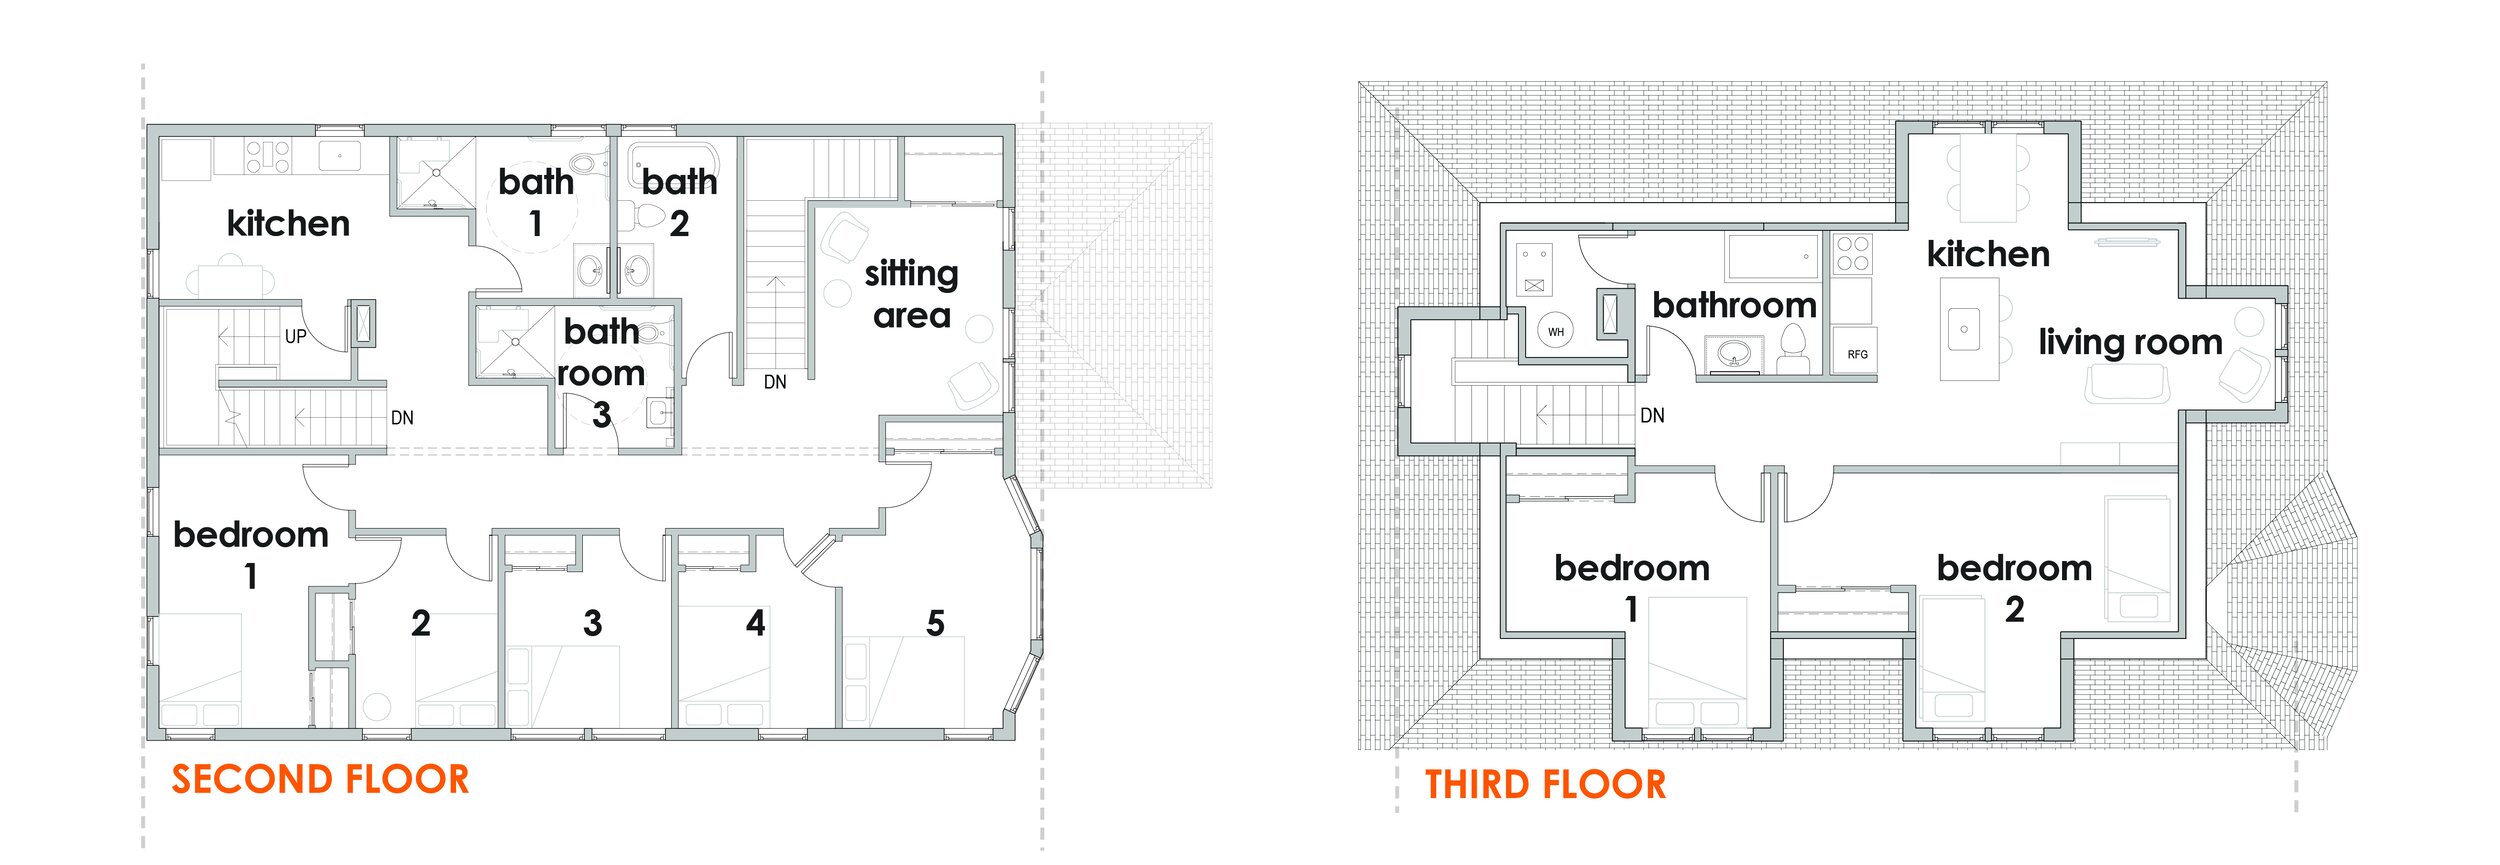 SW-Floor Plans 2-3.jpg